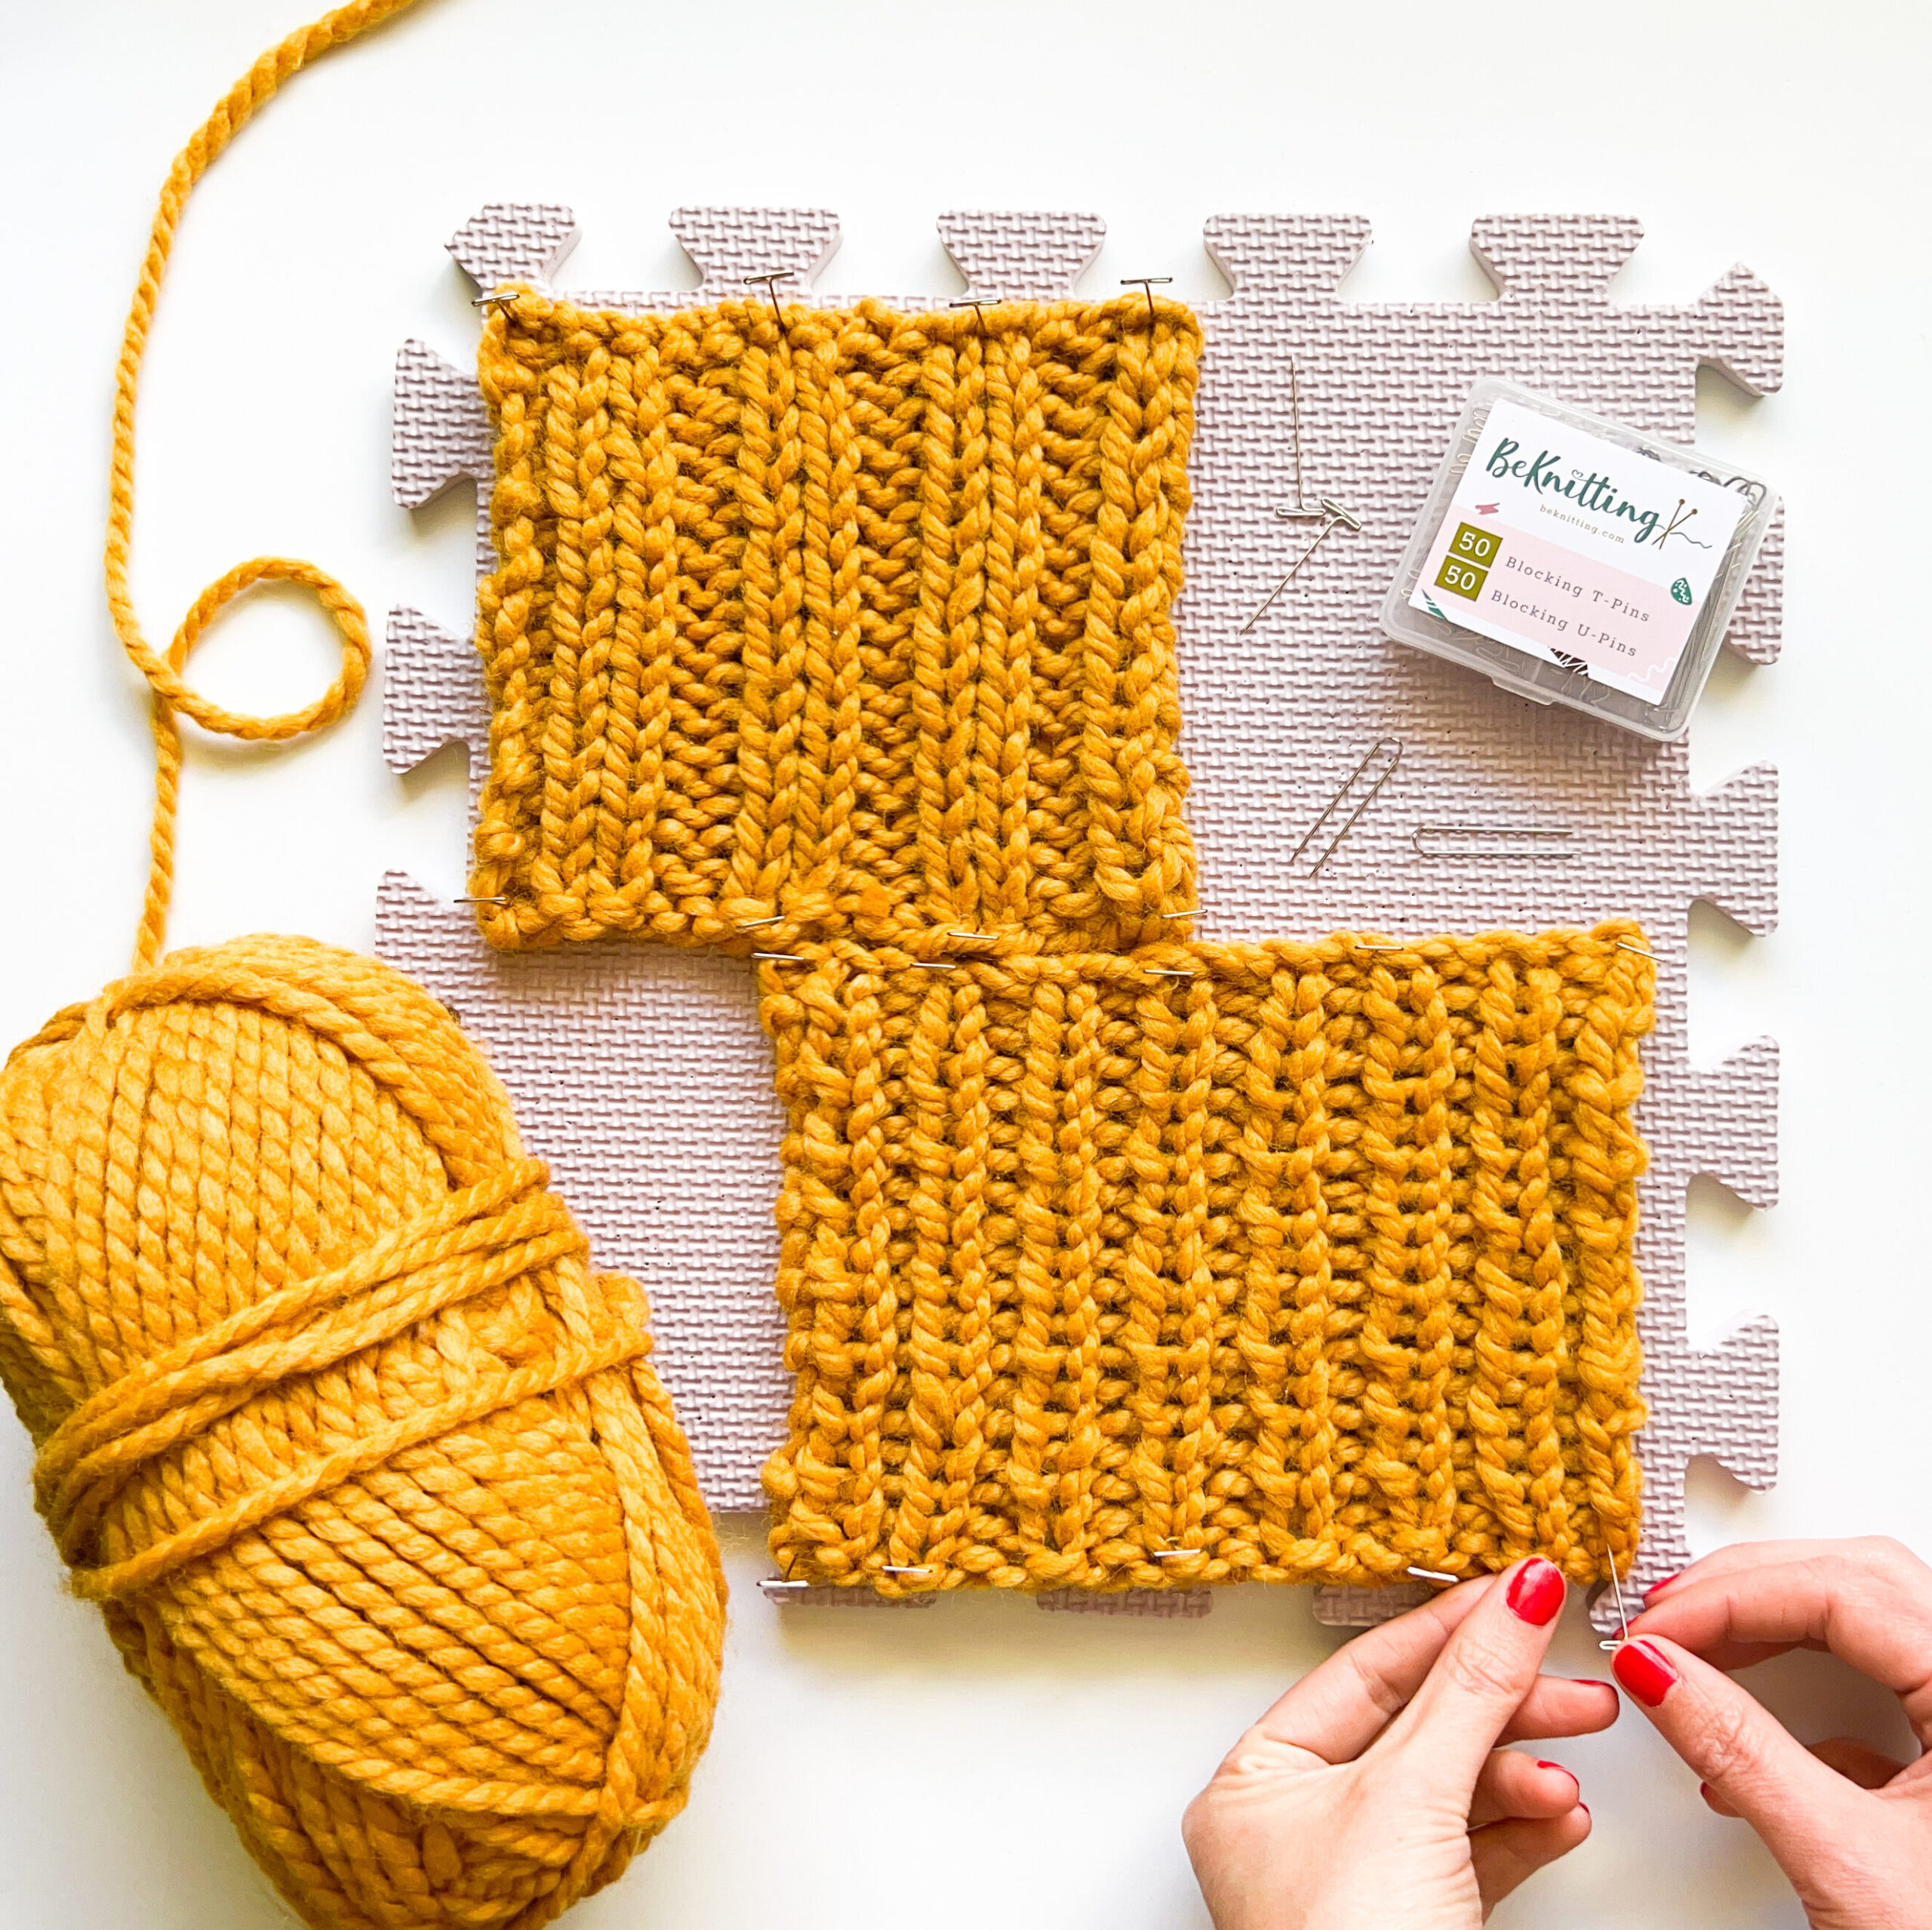 Rib Stitch in Knitting